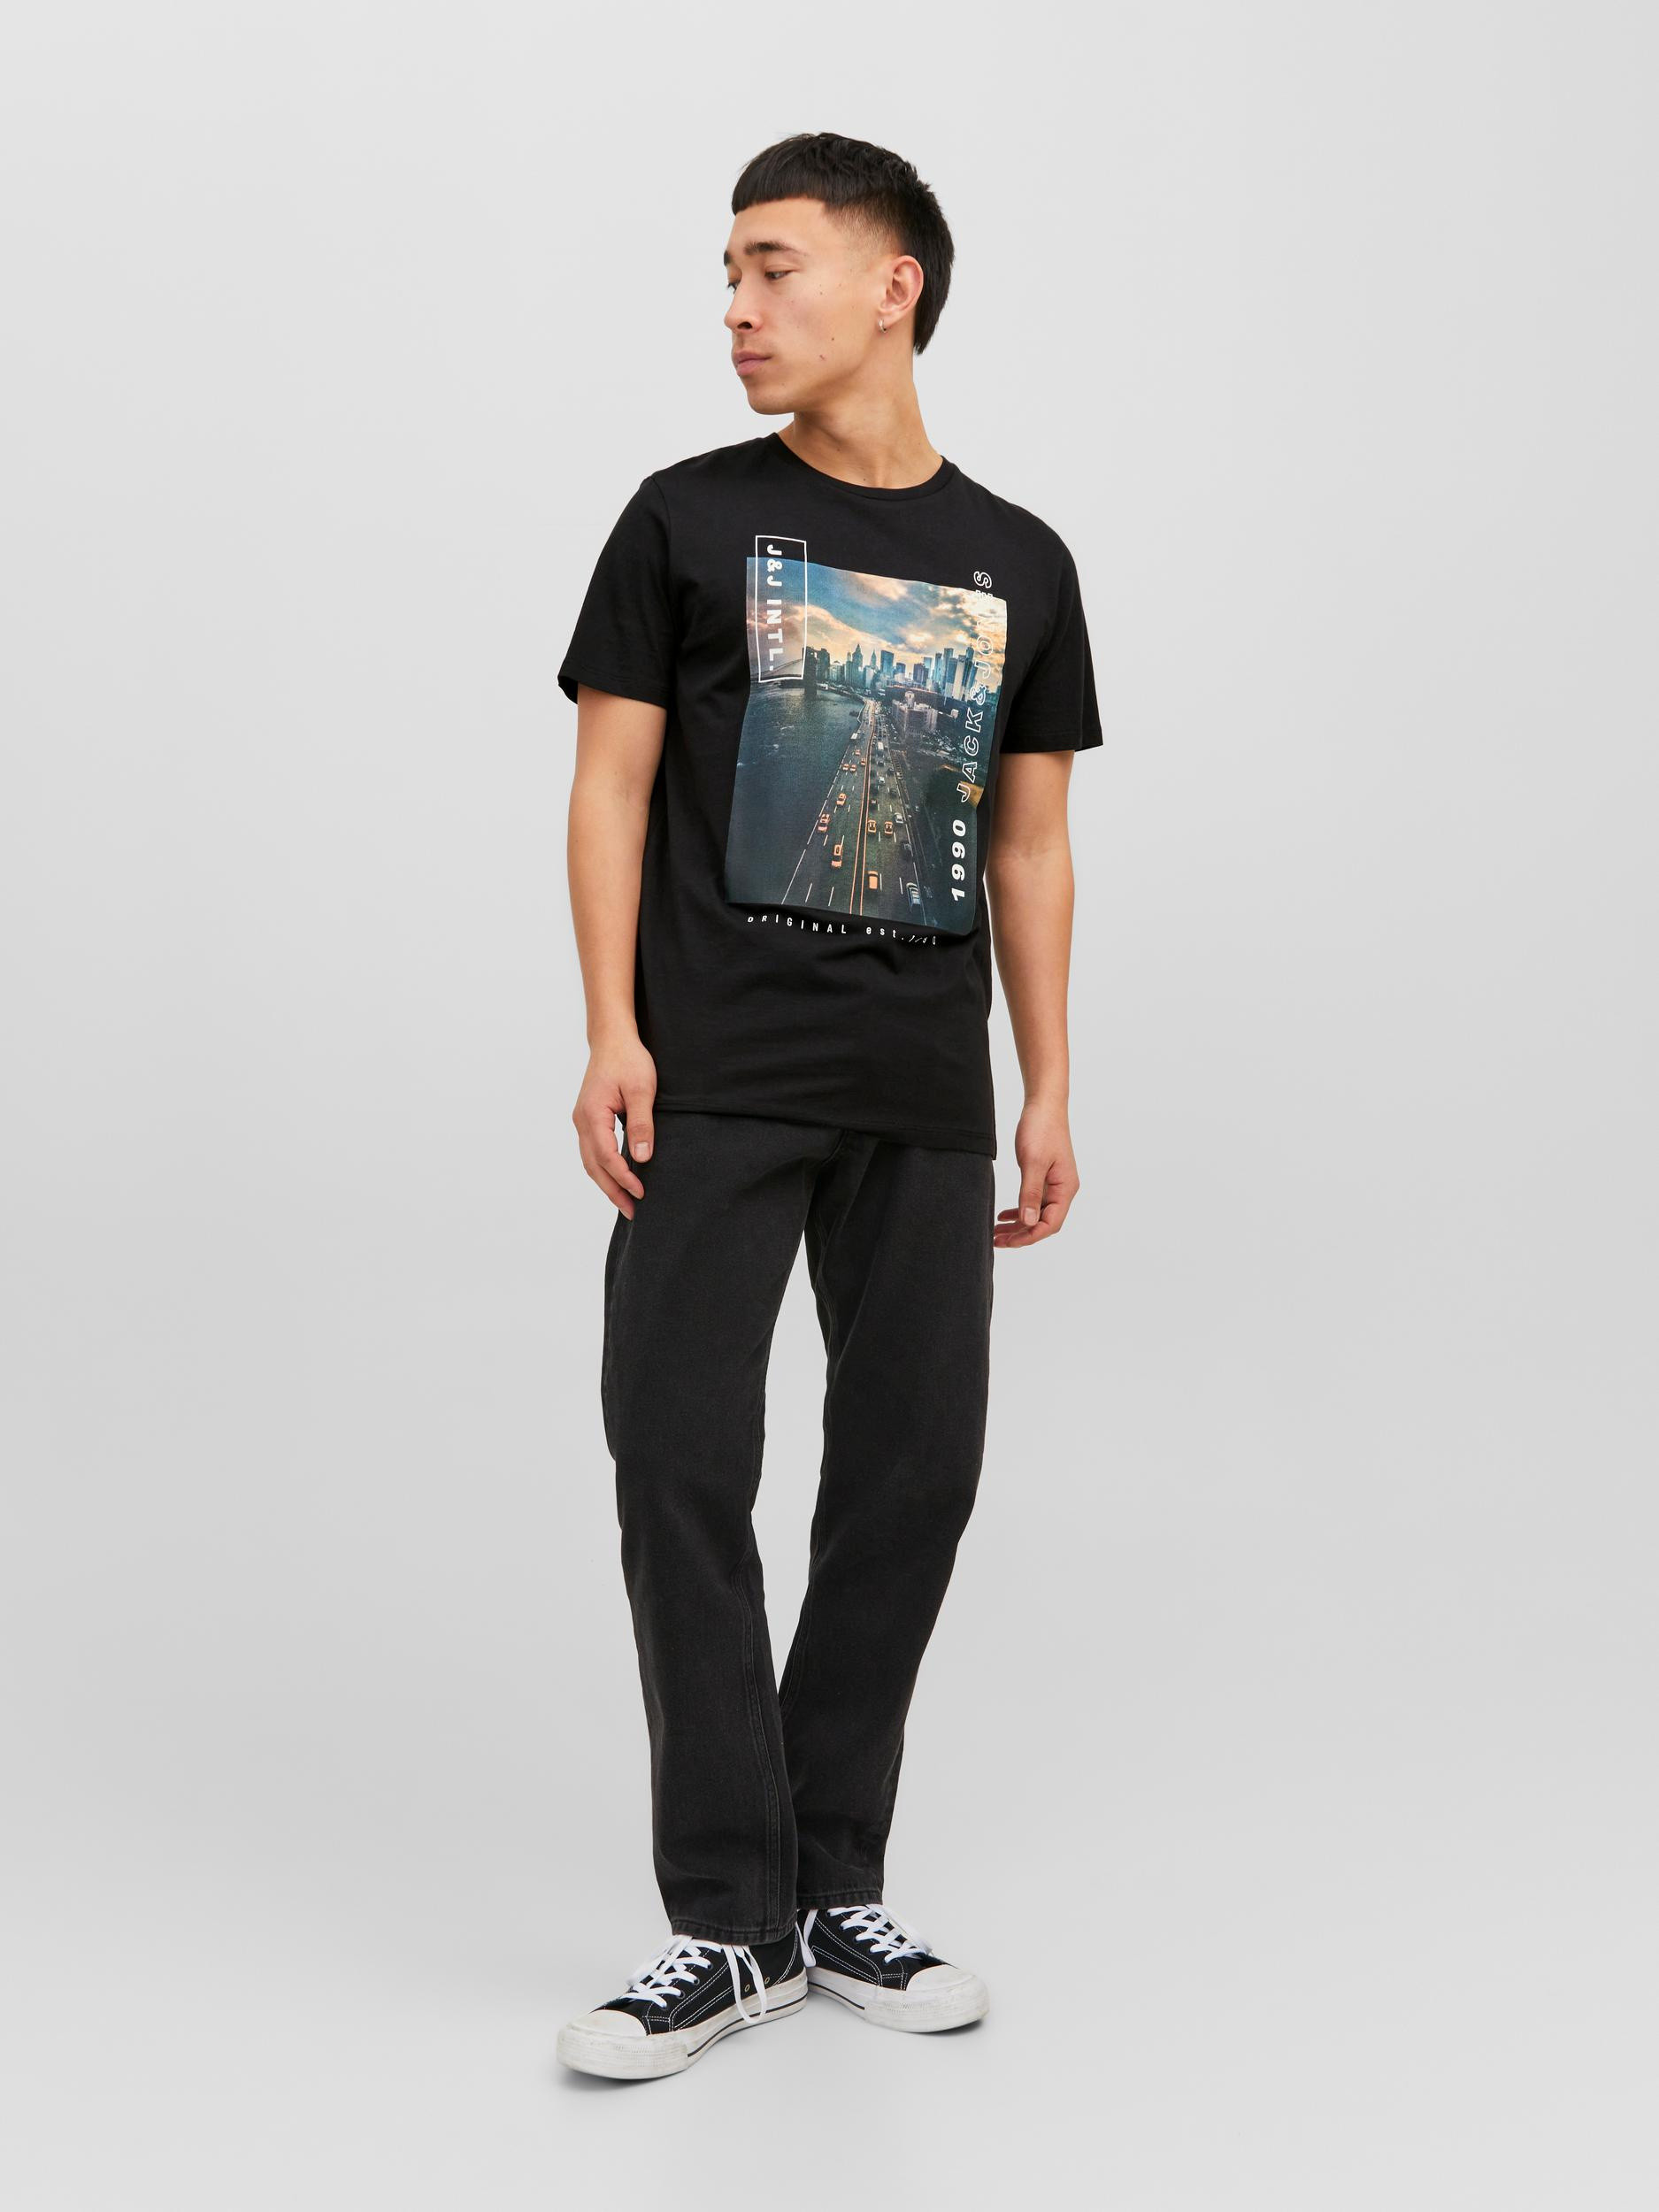 Jack & Jones -Cotton T-shirt with print, Black, large image number 1